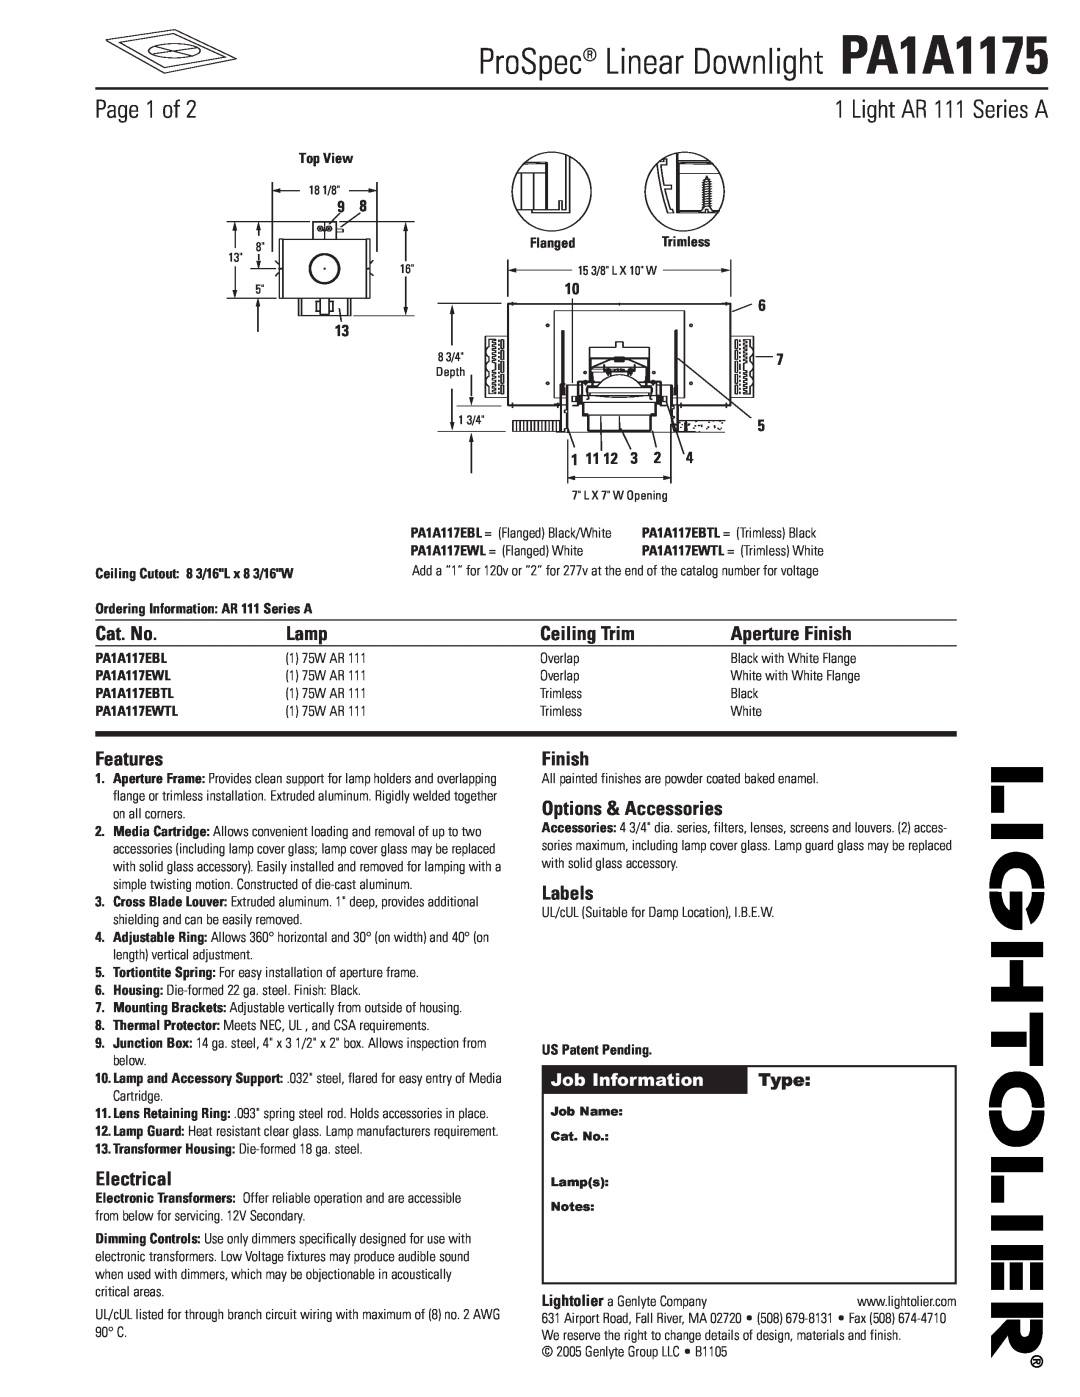 Lightolier manual ProSpec Linear Downlight PA1A1175, Page 1 of, Type, Job Information, Light AR 111 Series A, Cat. No 